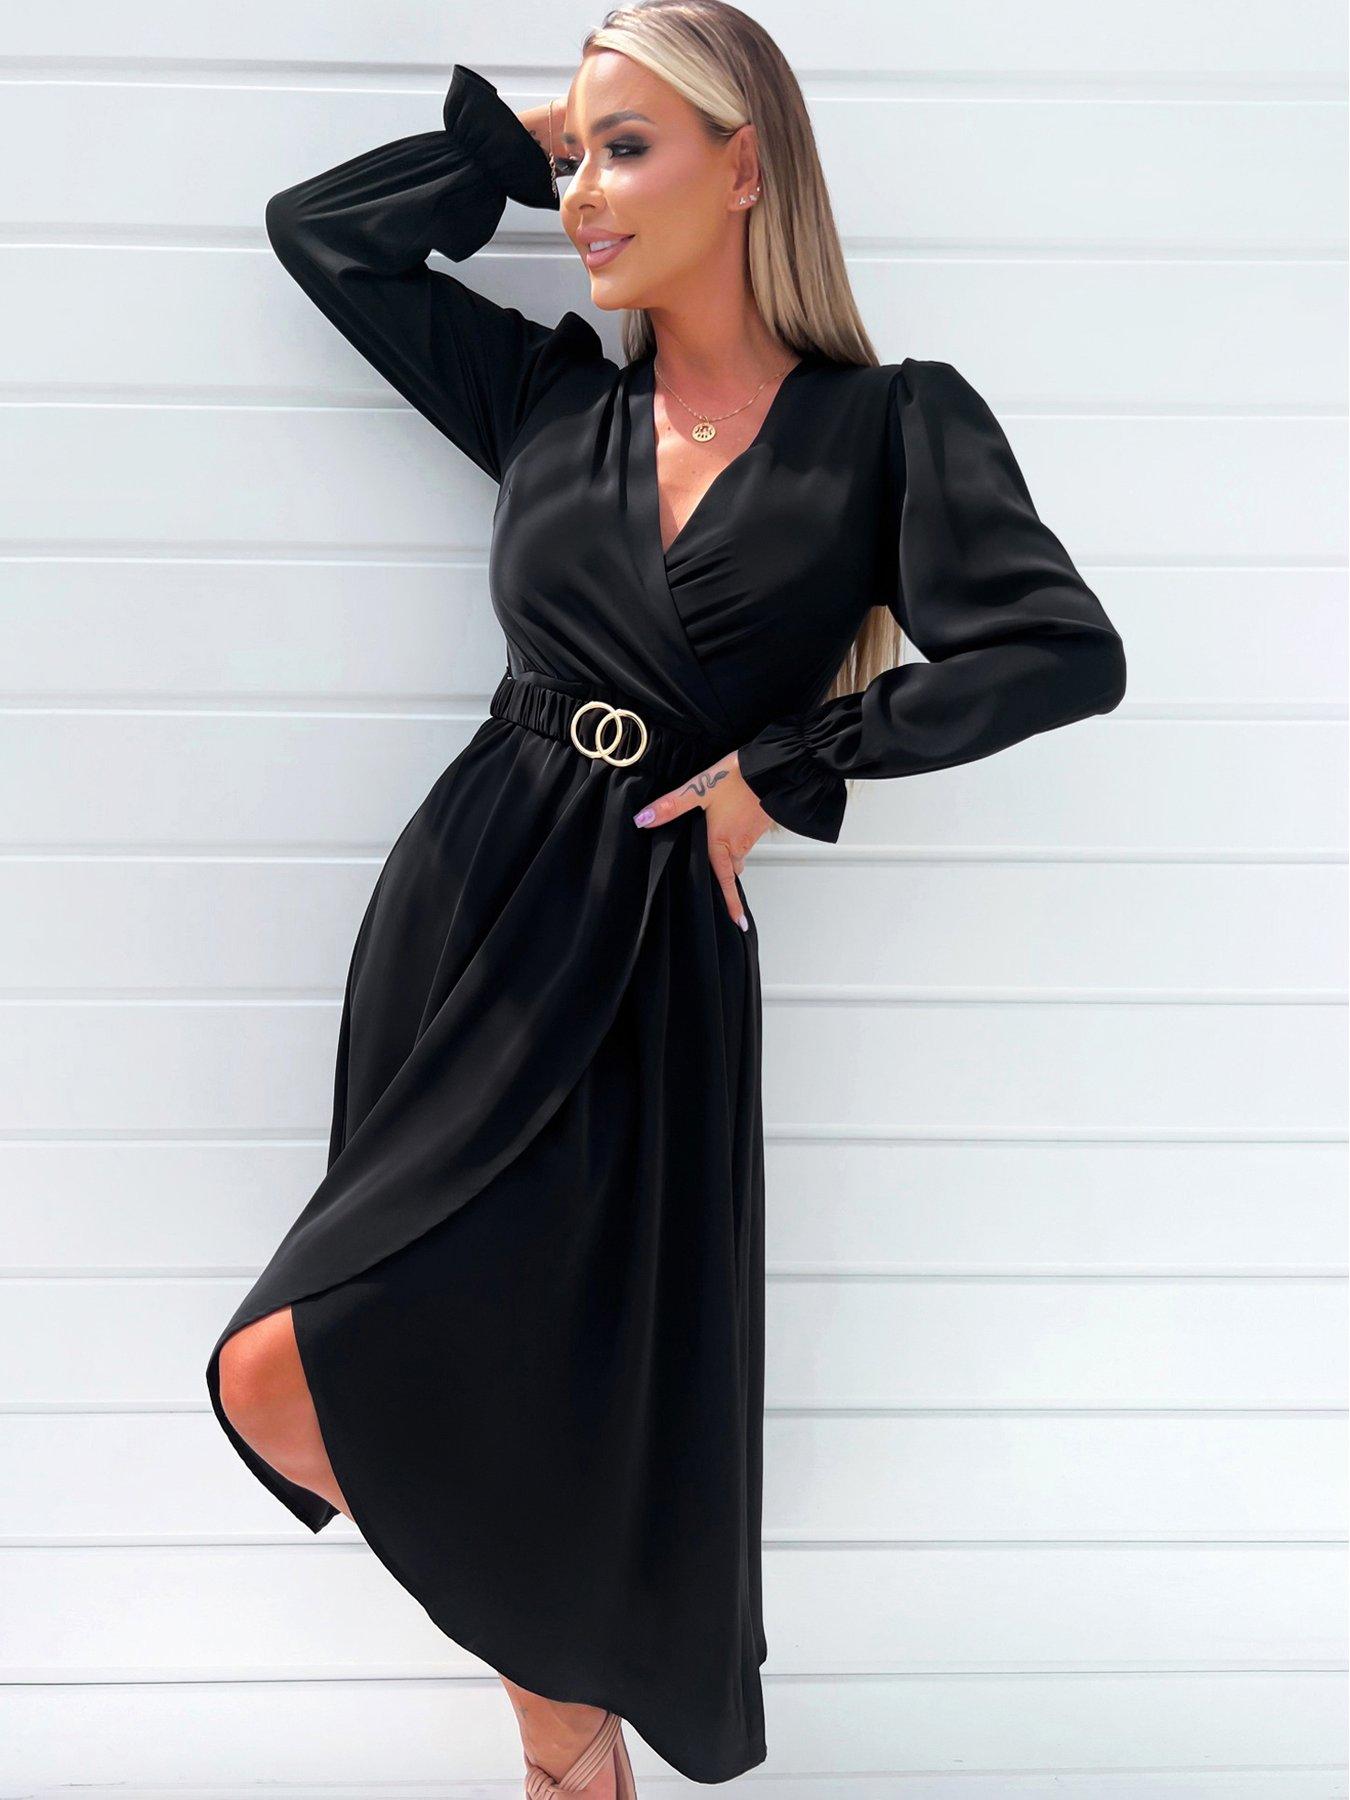 Bria Belted Slinky Stretch Dress - Black